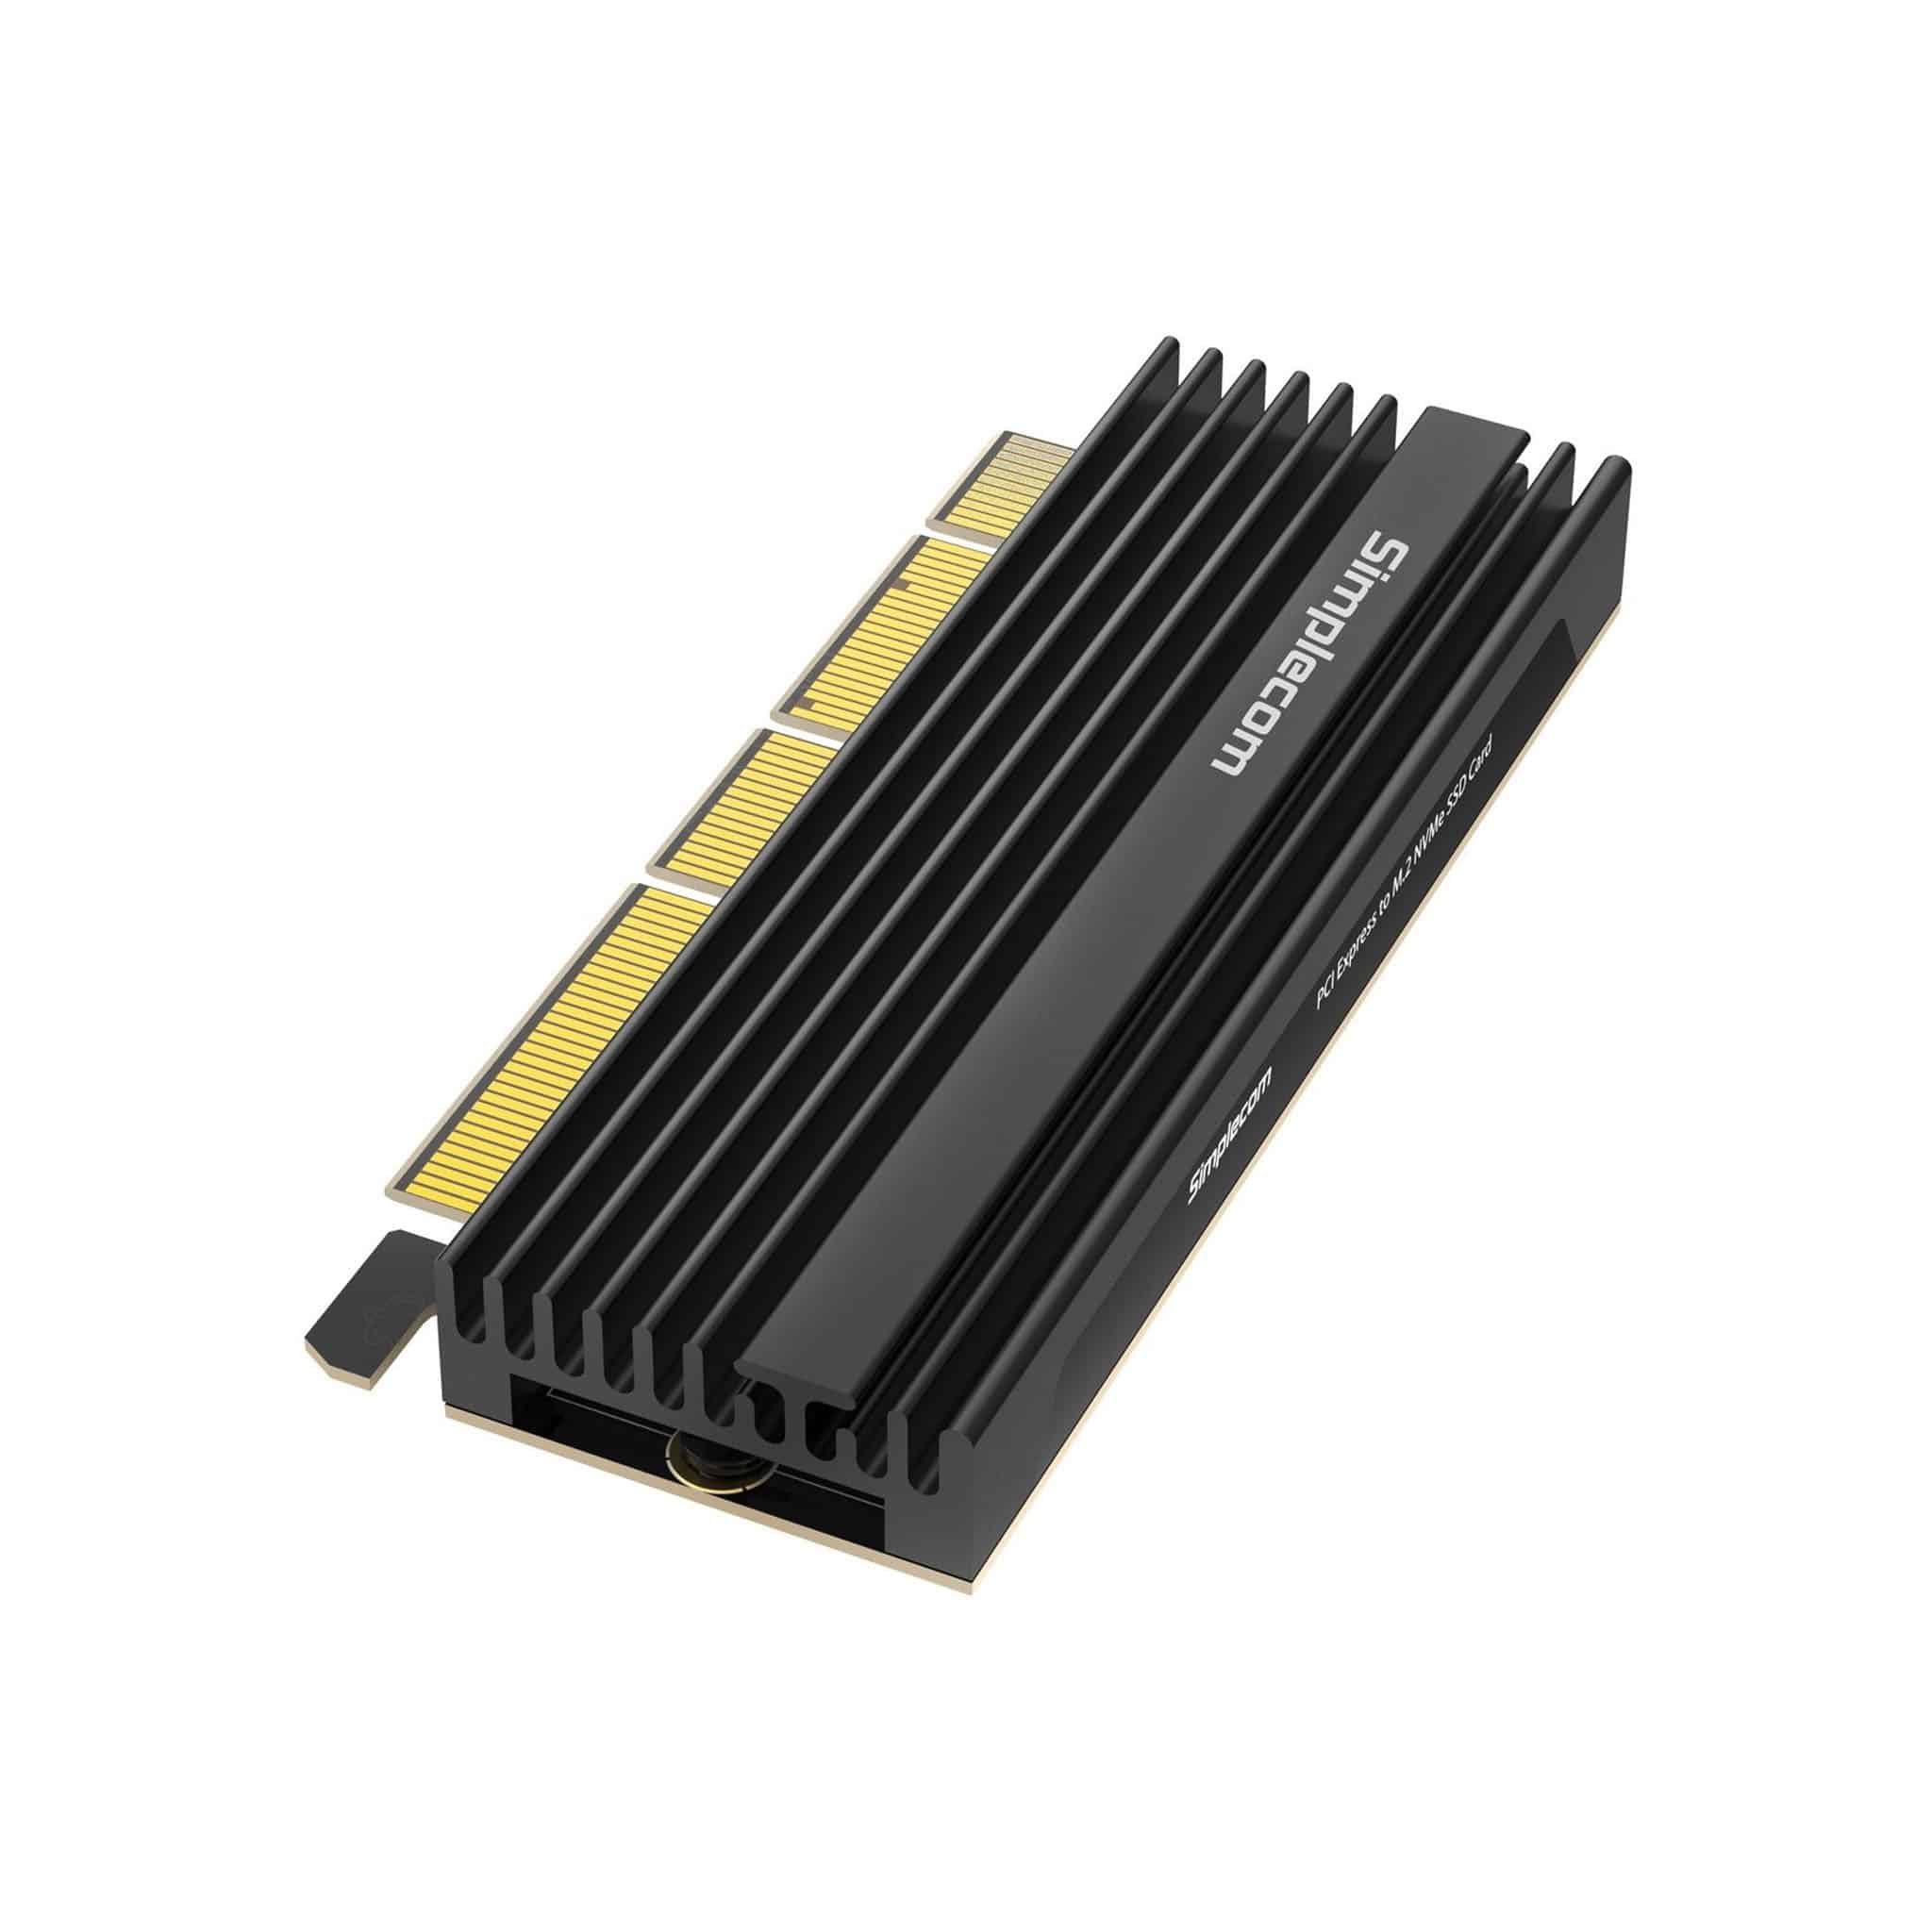 Simplecom EC415B Black PCIe to NVMe Expansion Card